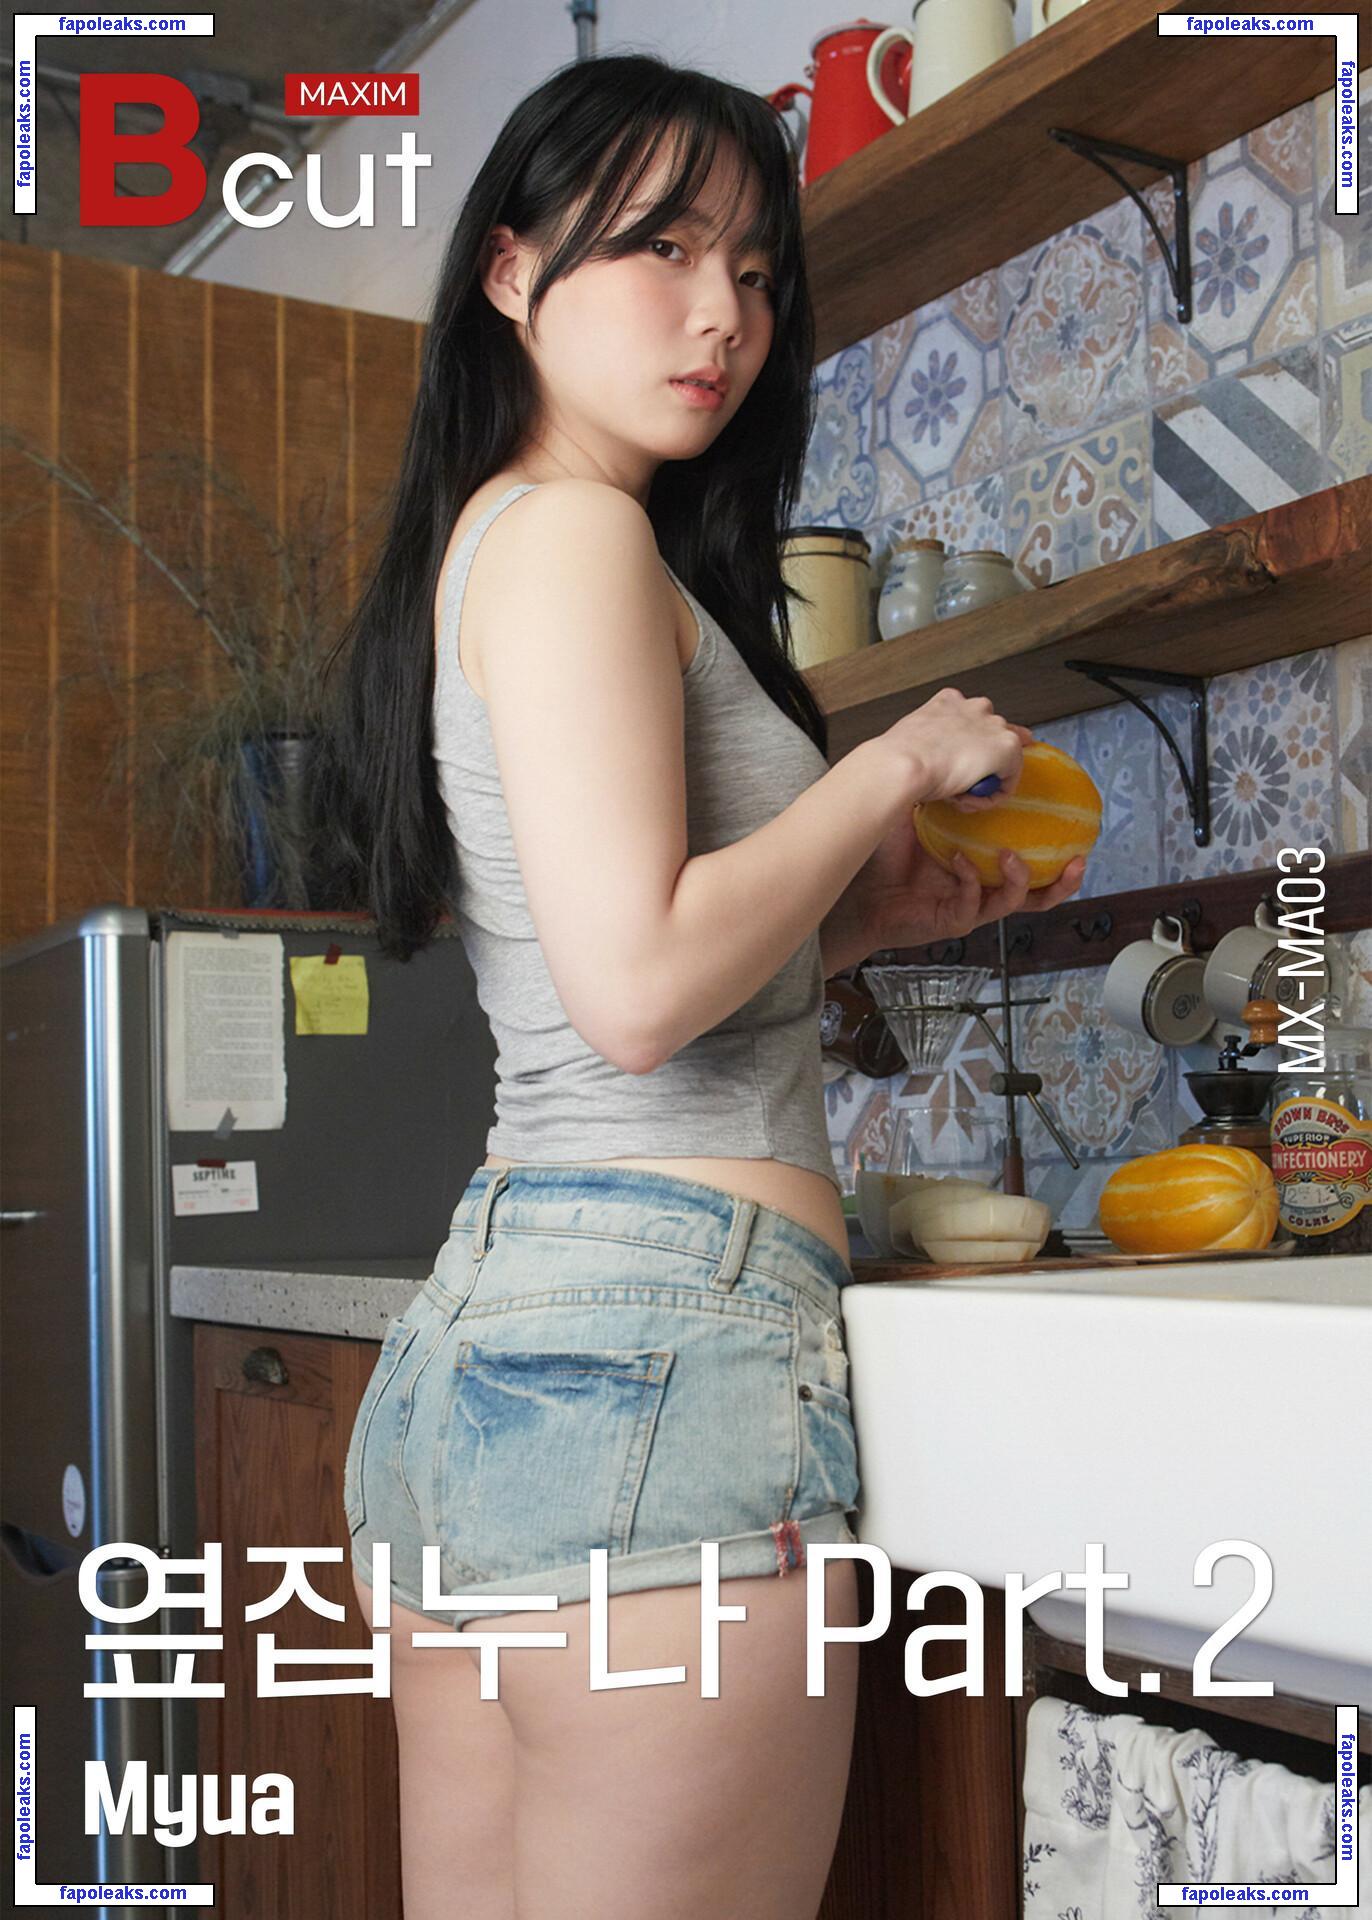 Myu-A / juicyfakku / myu_a_ / 뮤아 nude photo #0153 from OnlyFans